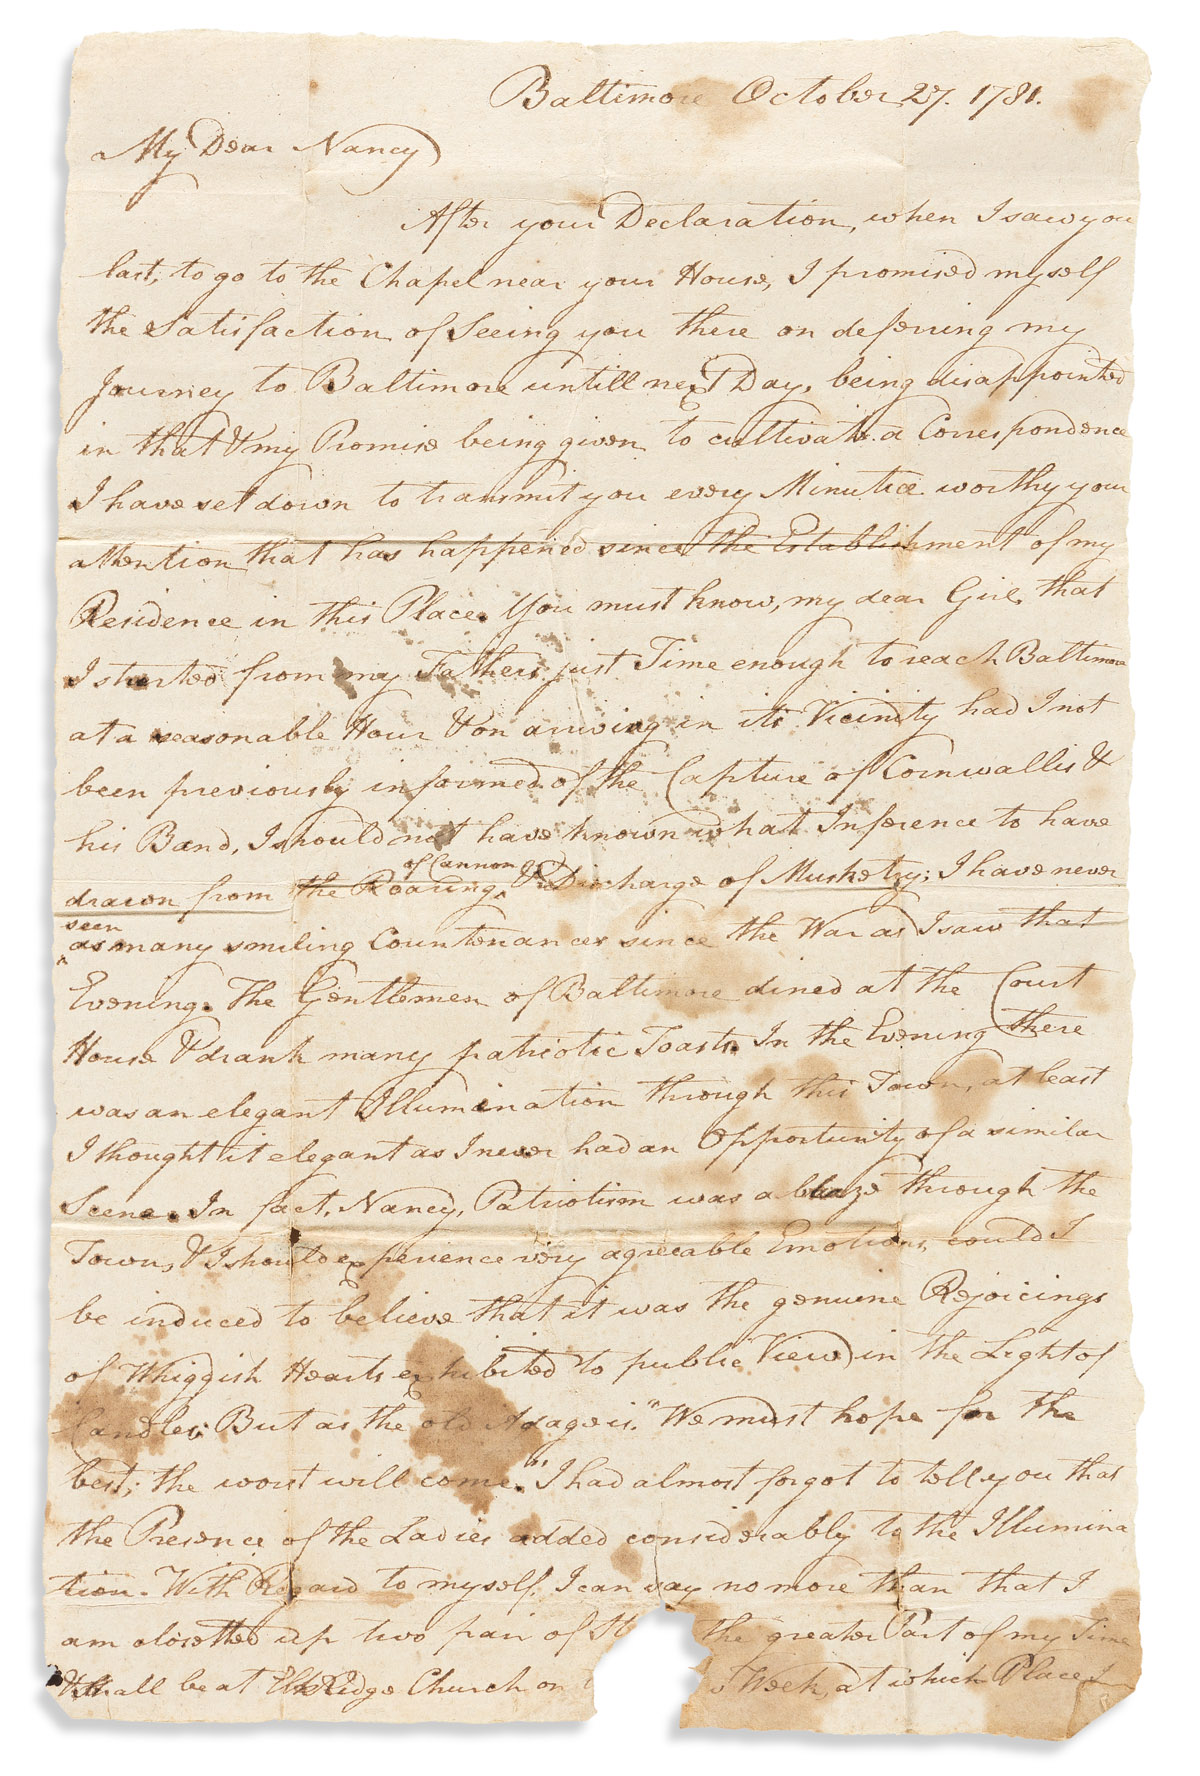 (AMERICAN REVOLUTION--1781.) H. Ridgely, Jr. Letter describing the festivities in Baltimore after the Yorktown surrender.